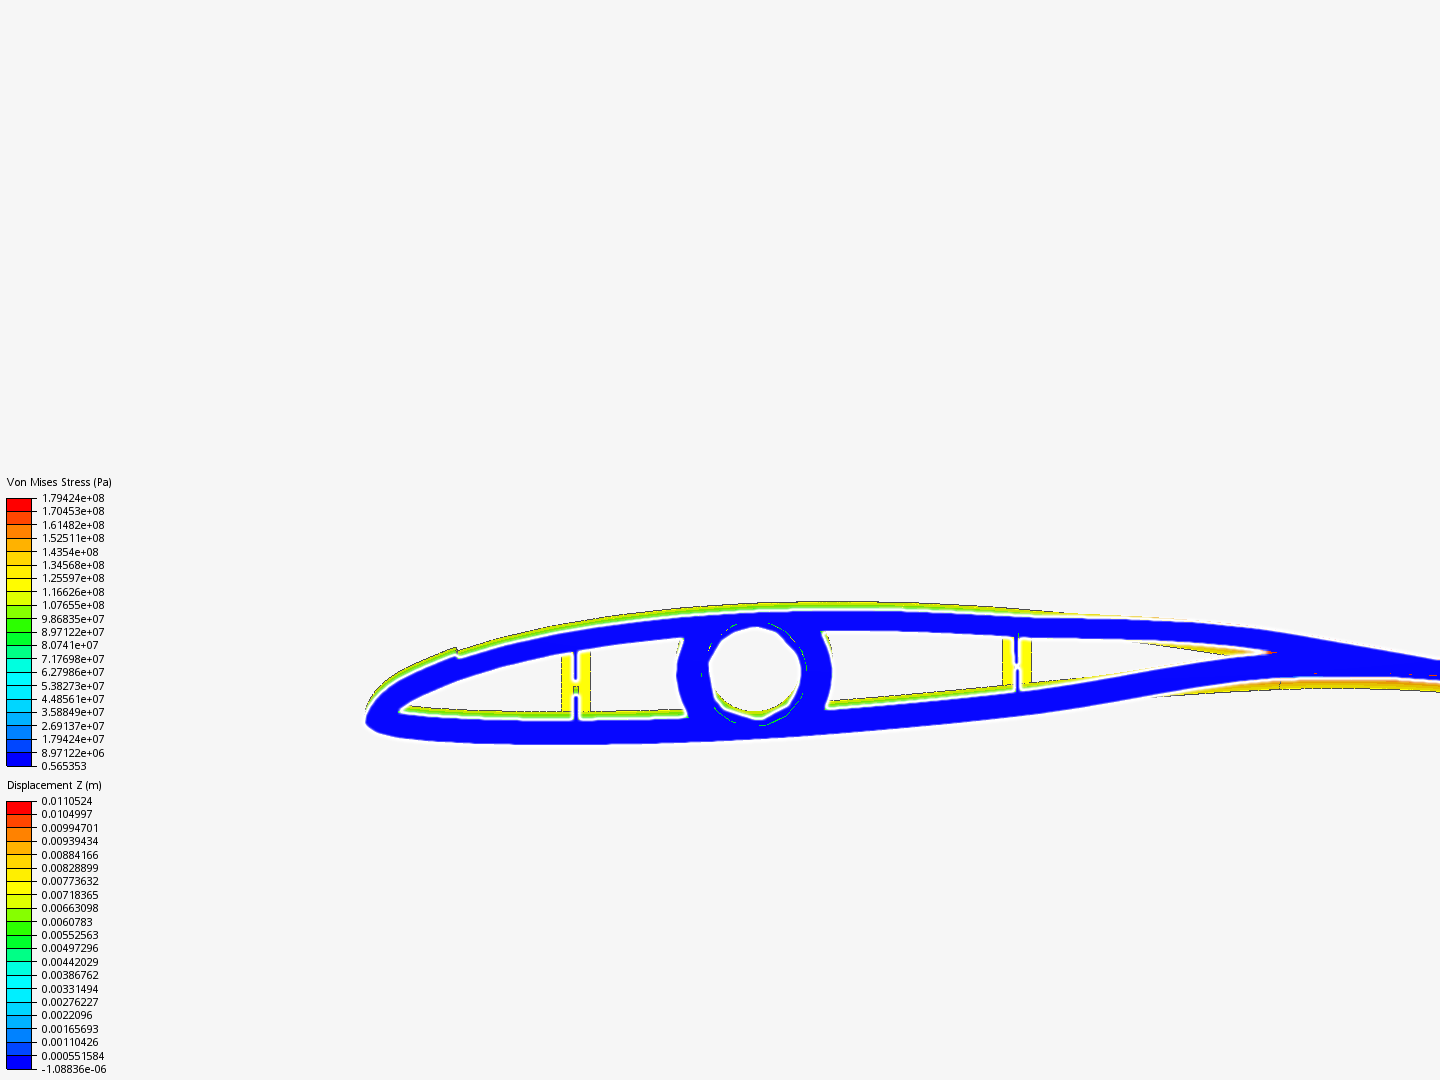 Solar Plane Wing image